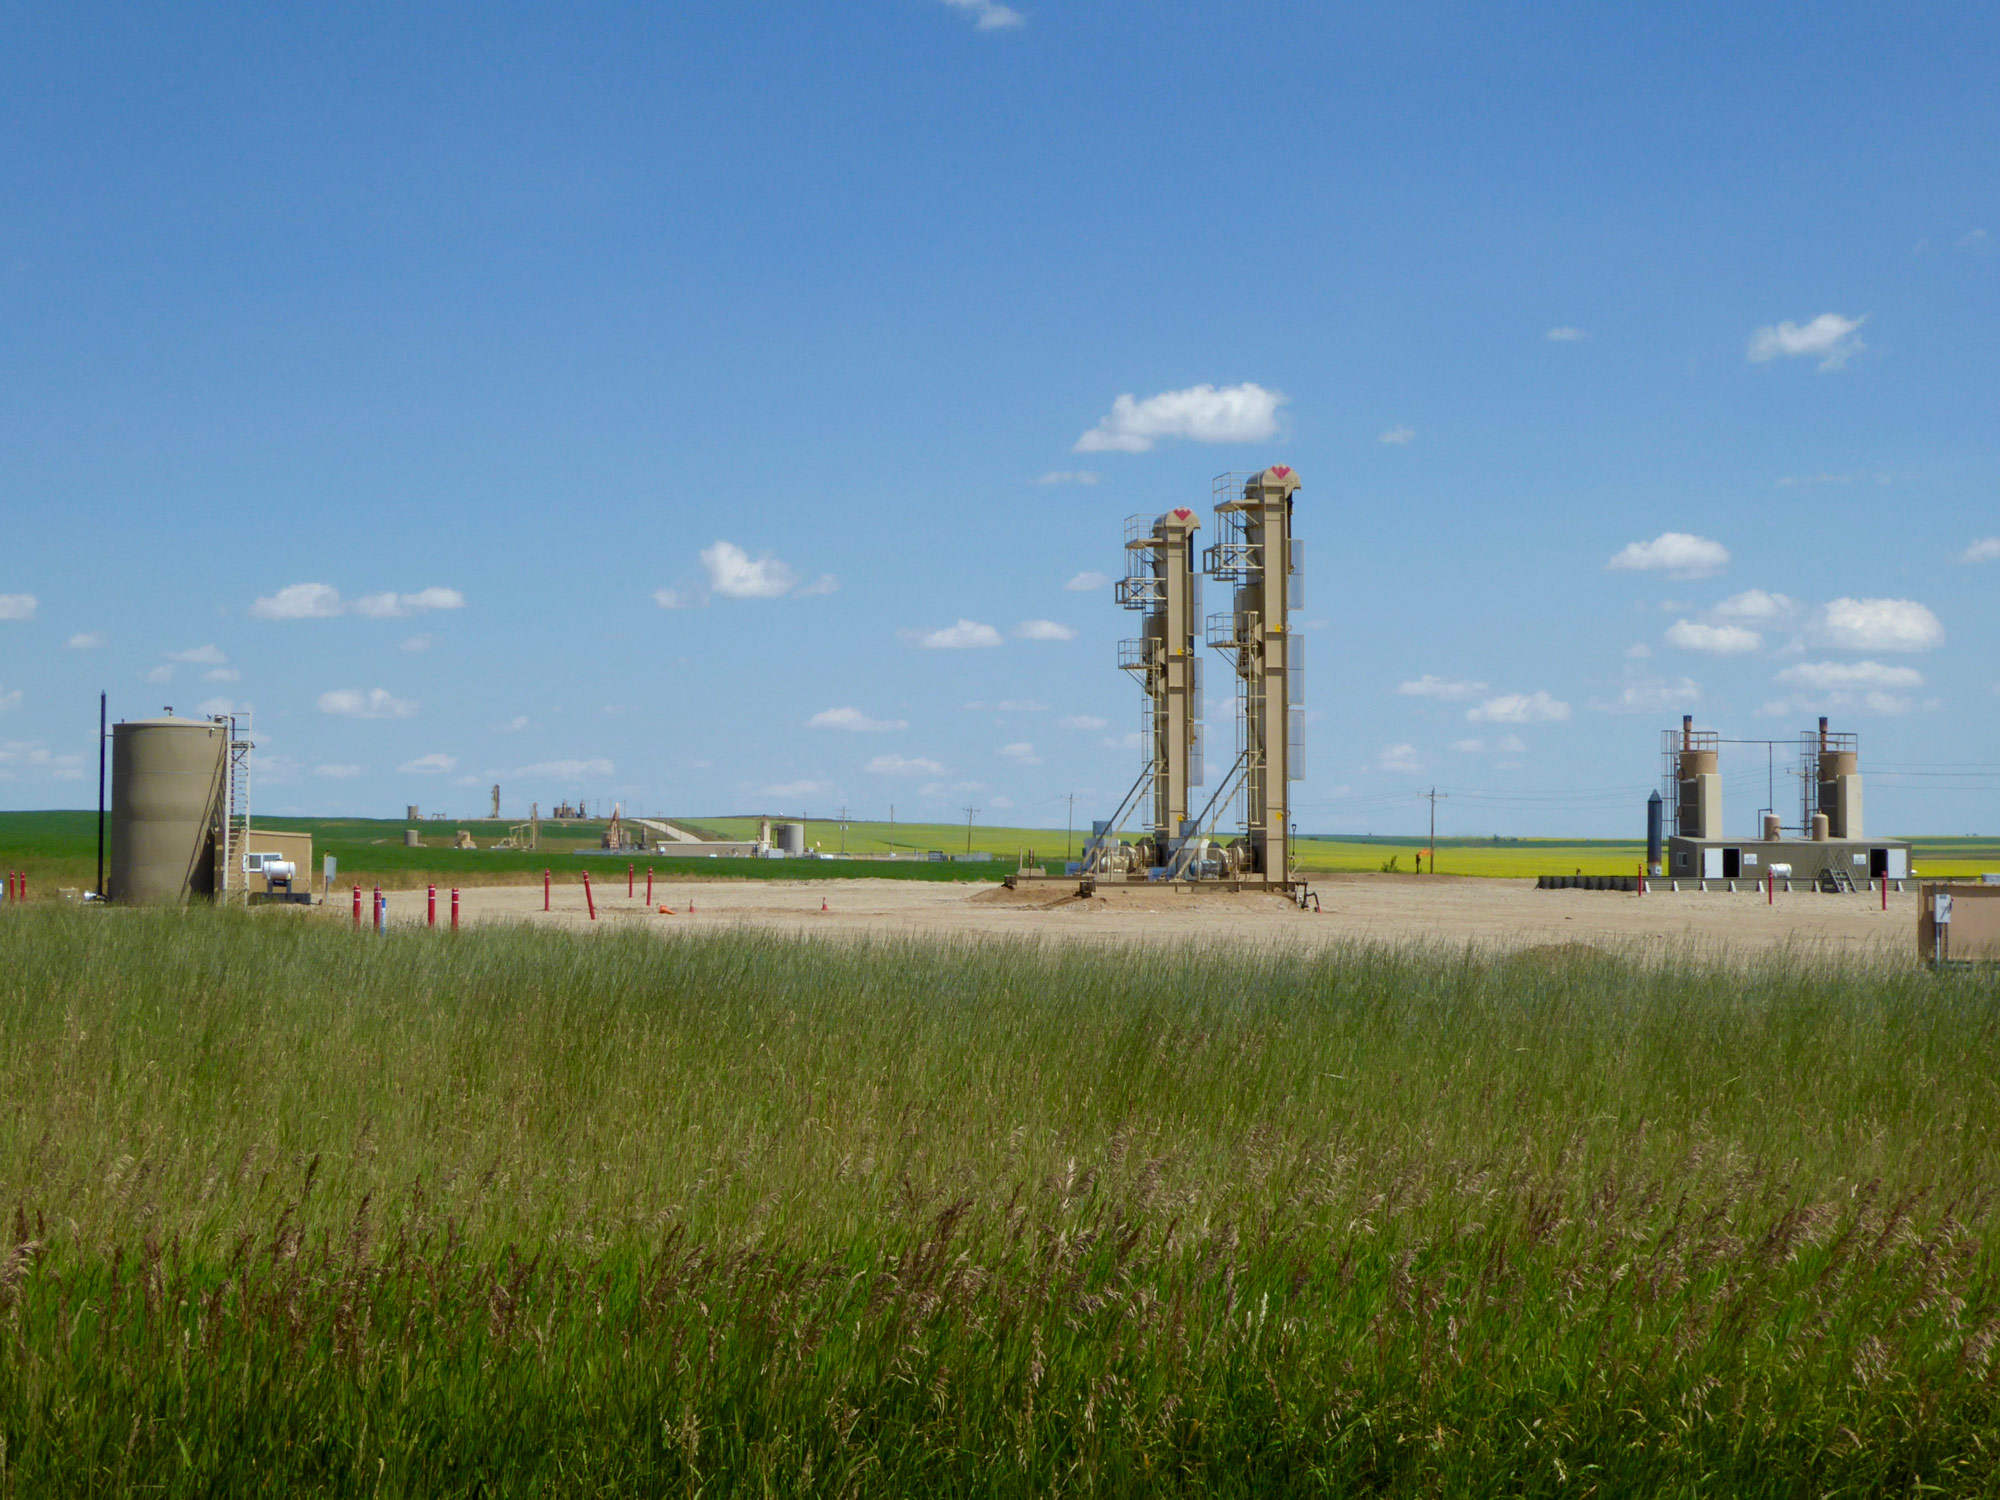  Oil development east of Williston, ND 